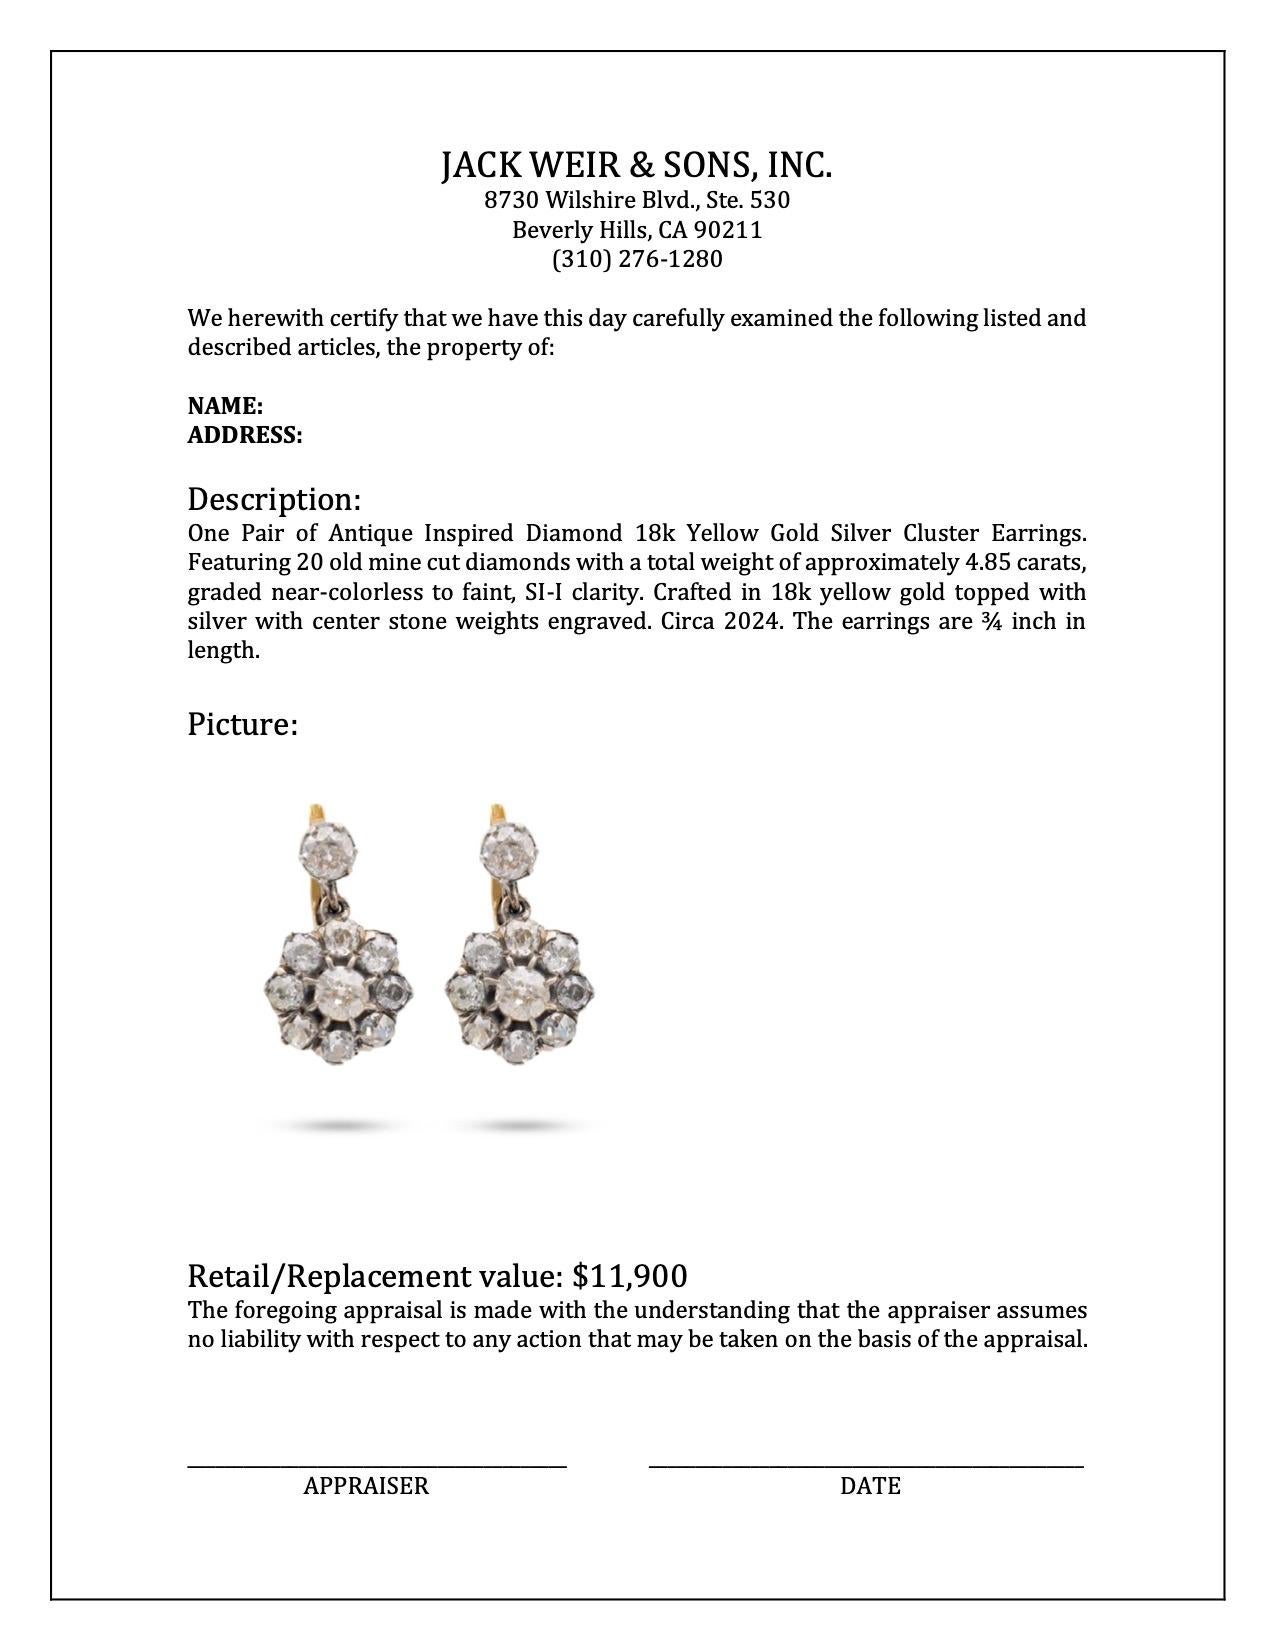 Women's or Men's Antique Inspired Diamond 18k Yellow Gold Silver Cluster Earrings For Sale